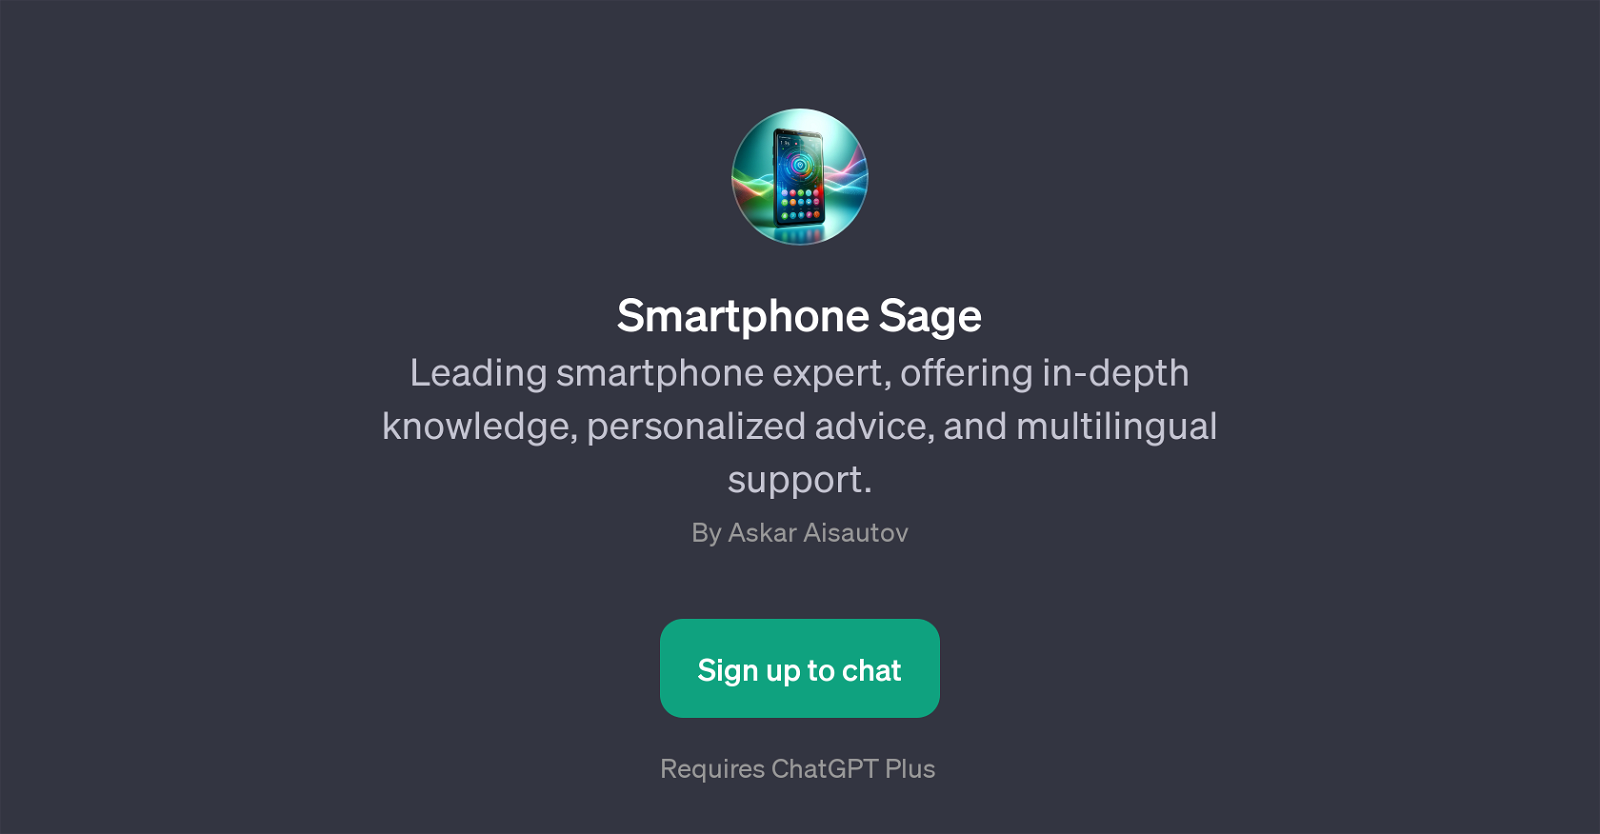 Smartphone Sage website